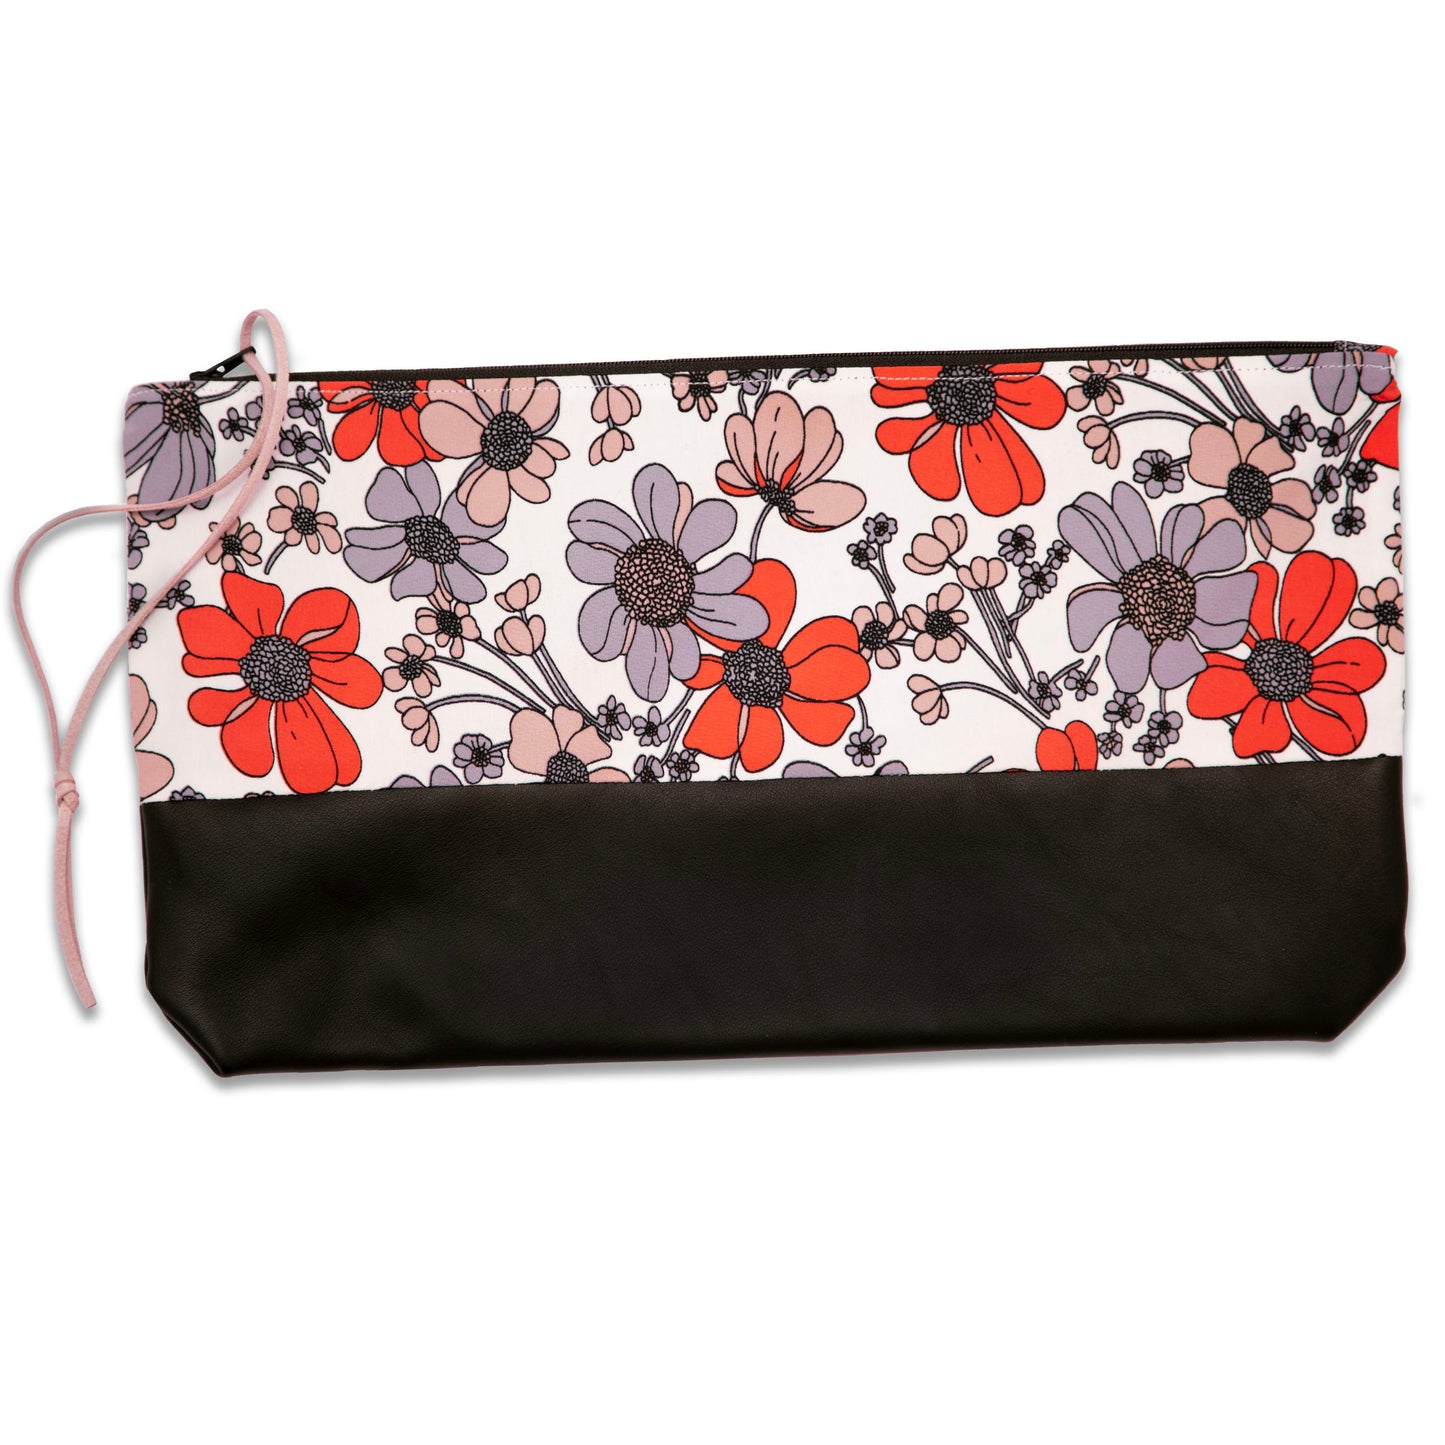 Daisy Chain Floral + Leather Clutch Bag, Handmade